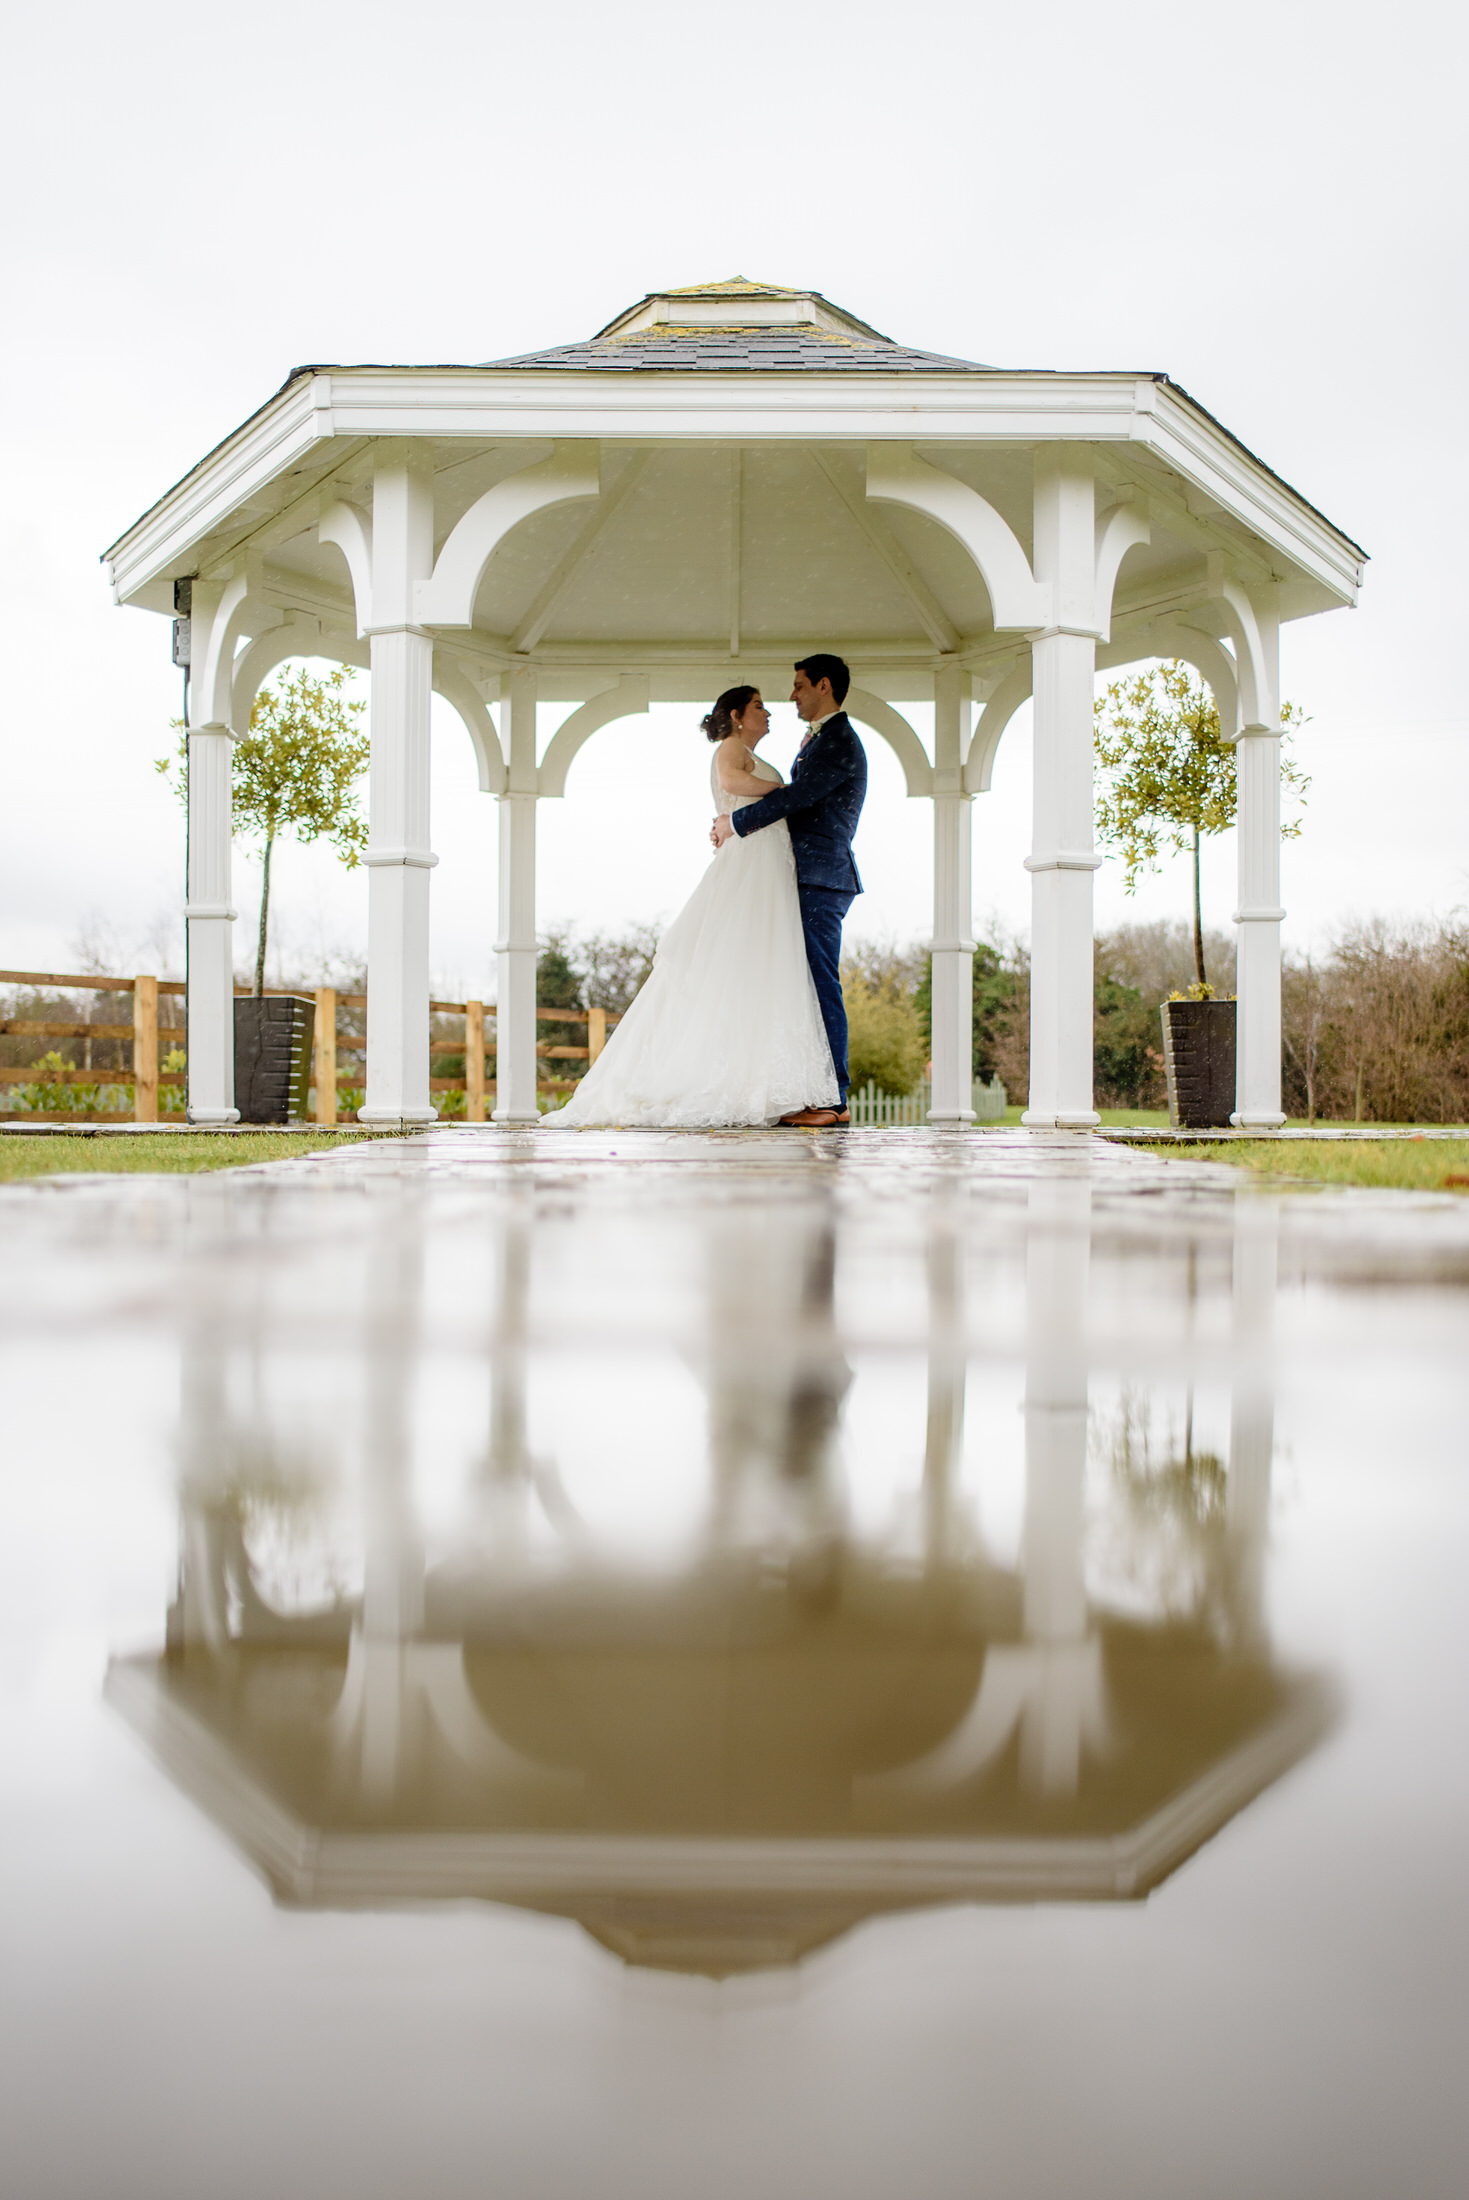 A bride and groom standing under a gazebo in the rain at their Brackenborough Hotel wedding.